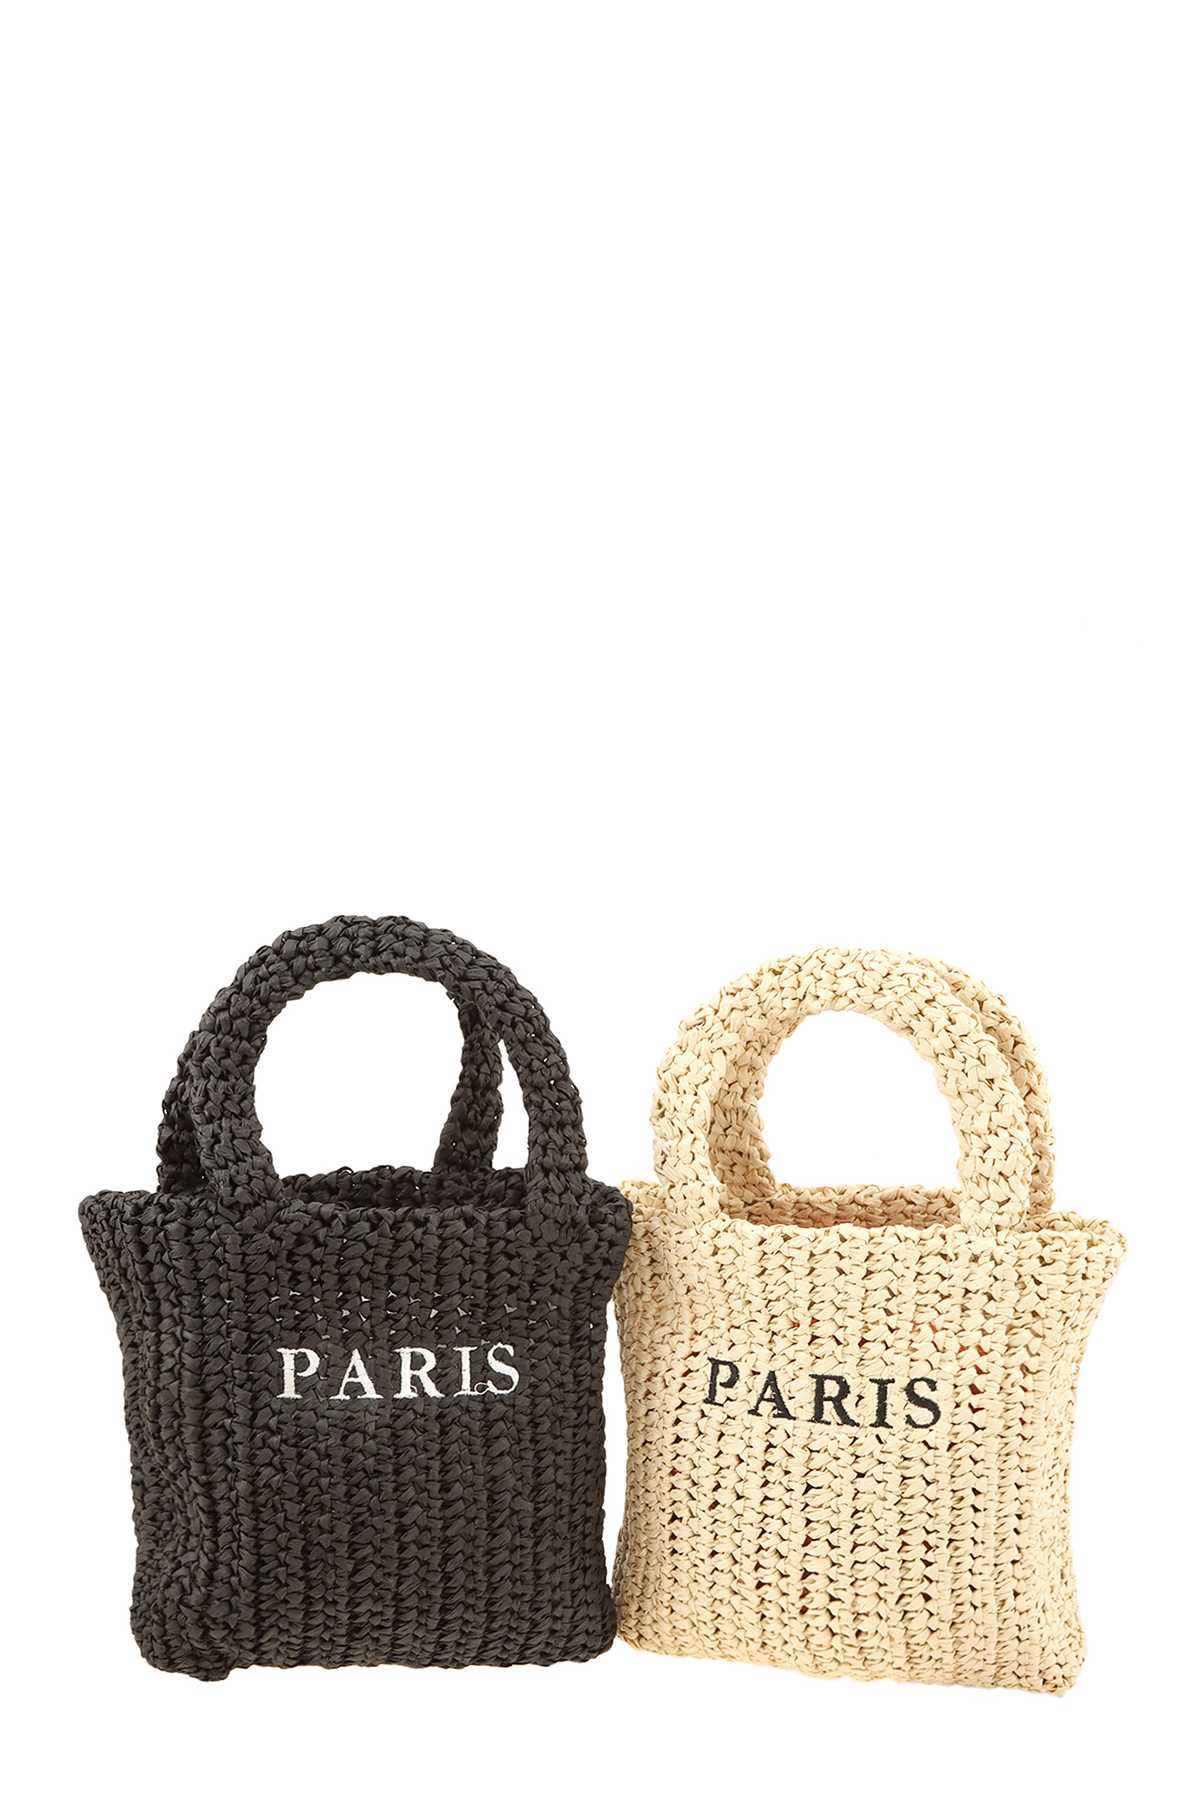 PARIS Embroidery Straw Mini Tote Bag